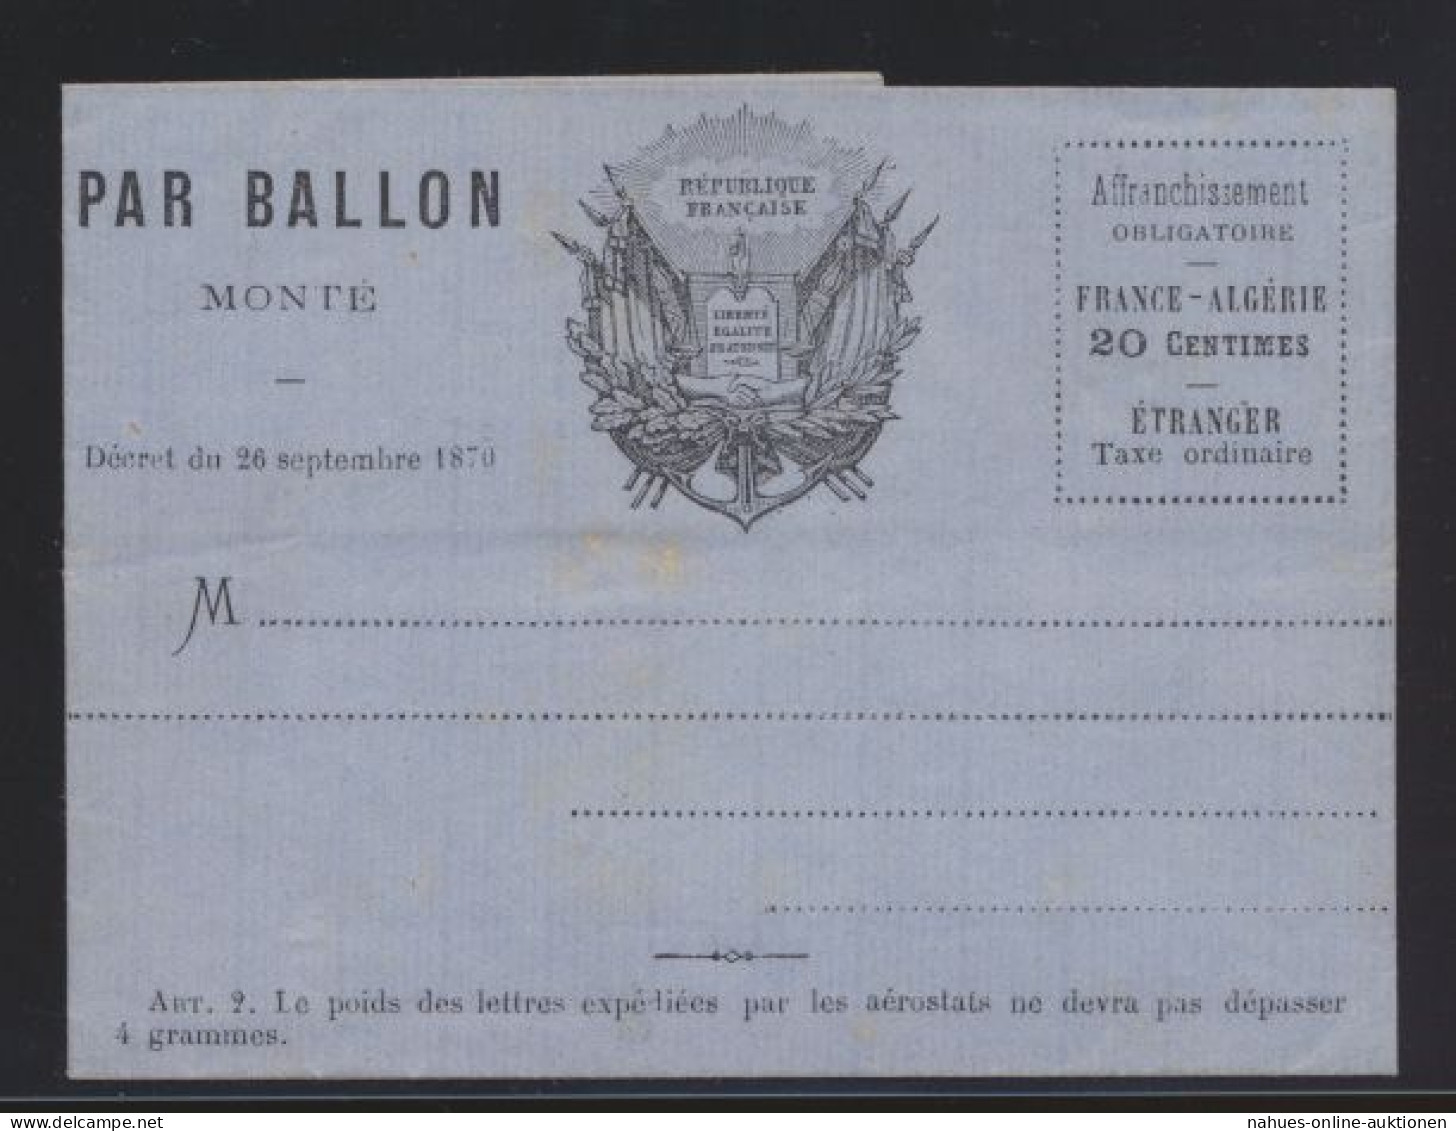 Flugpost Air Mail Ballonpost Ballon Monte Frankreich France 20 C. Faltbrief Von - Storia Postale